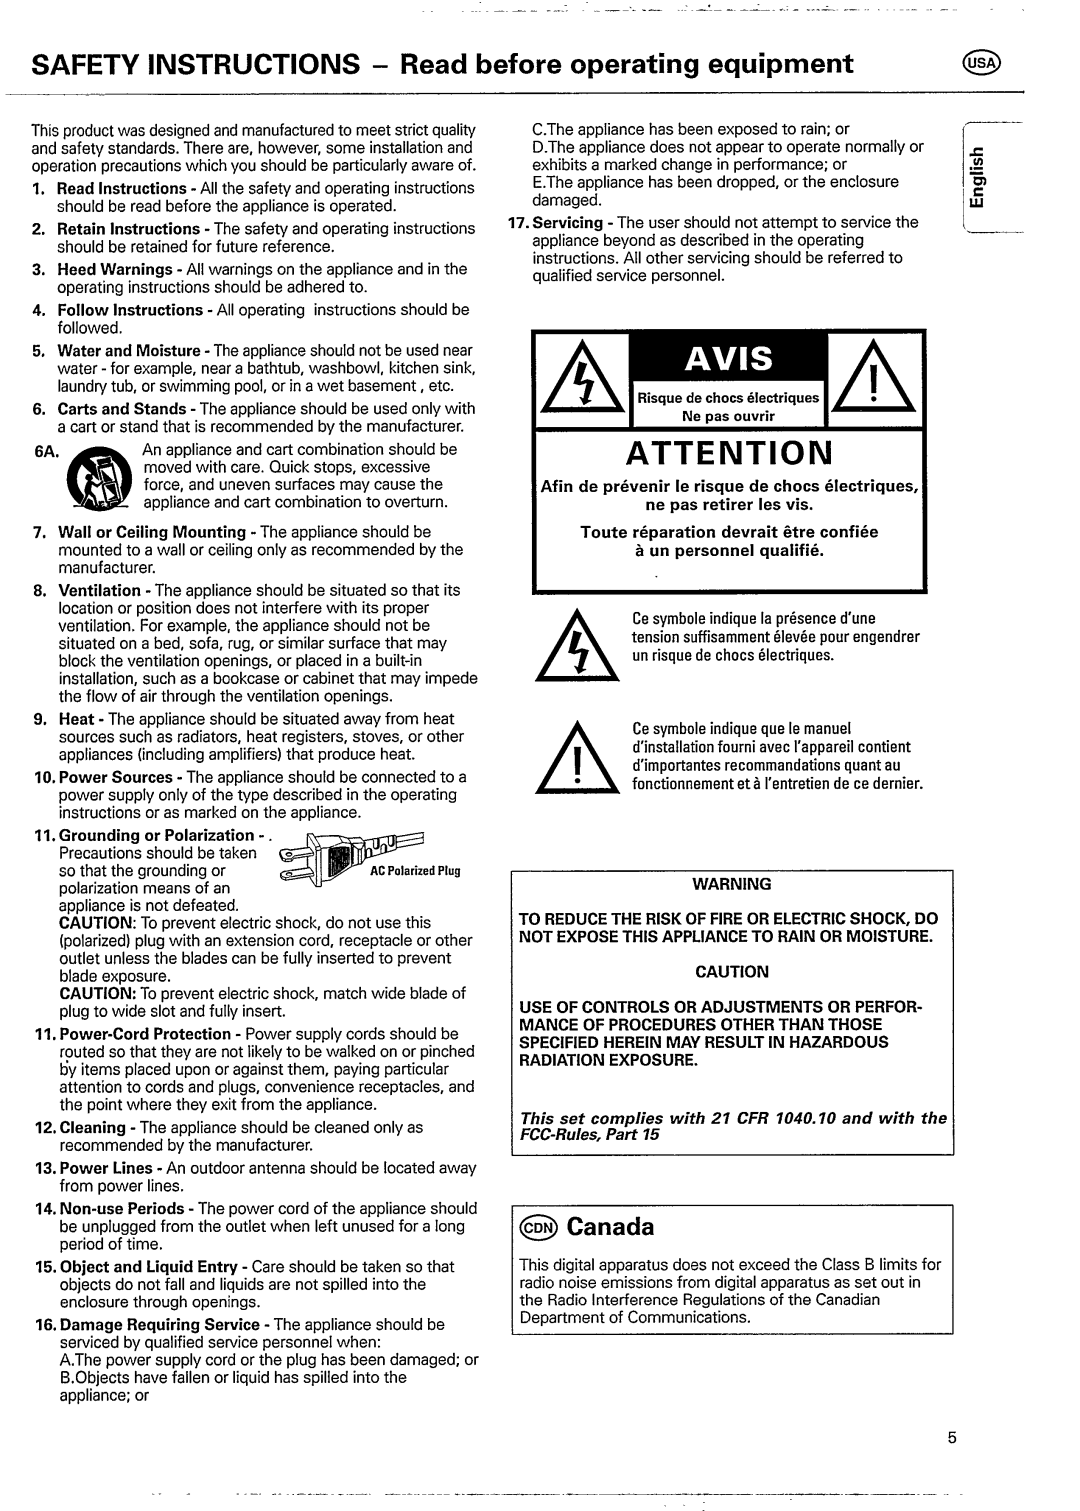 Philips CDC926 manual 